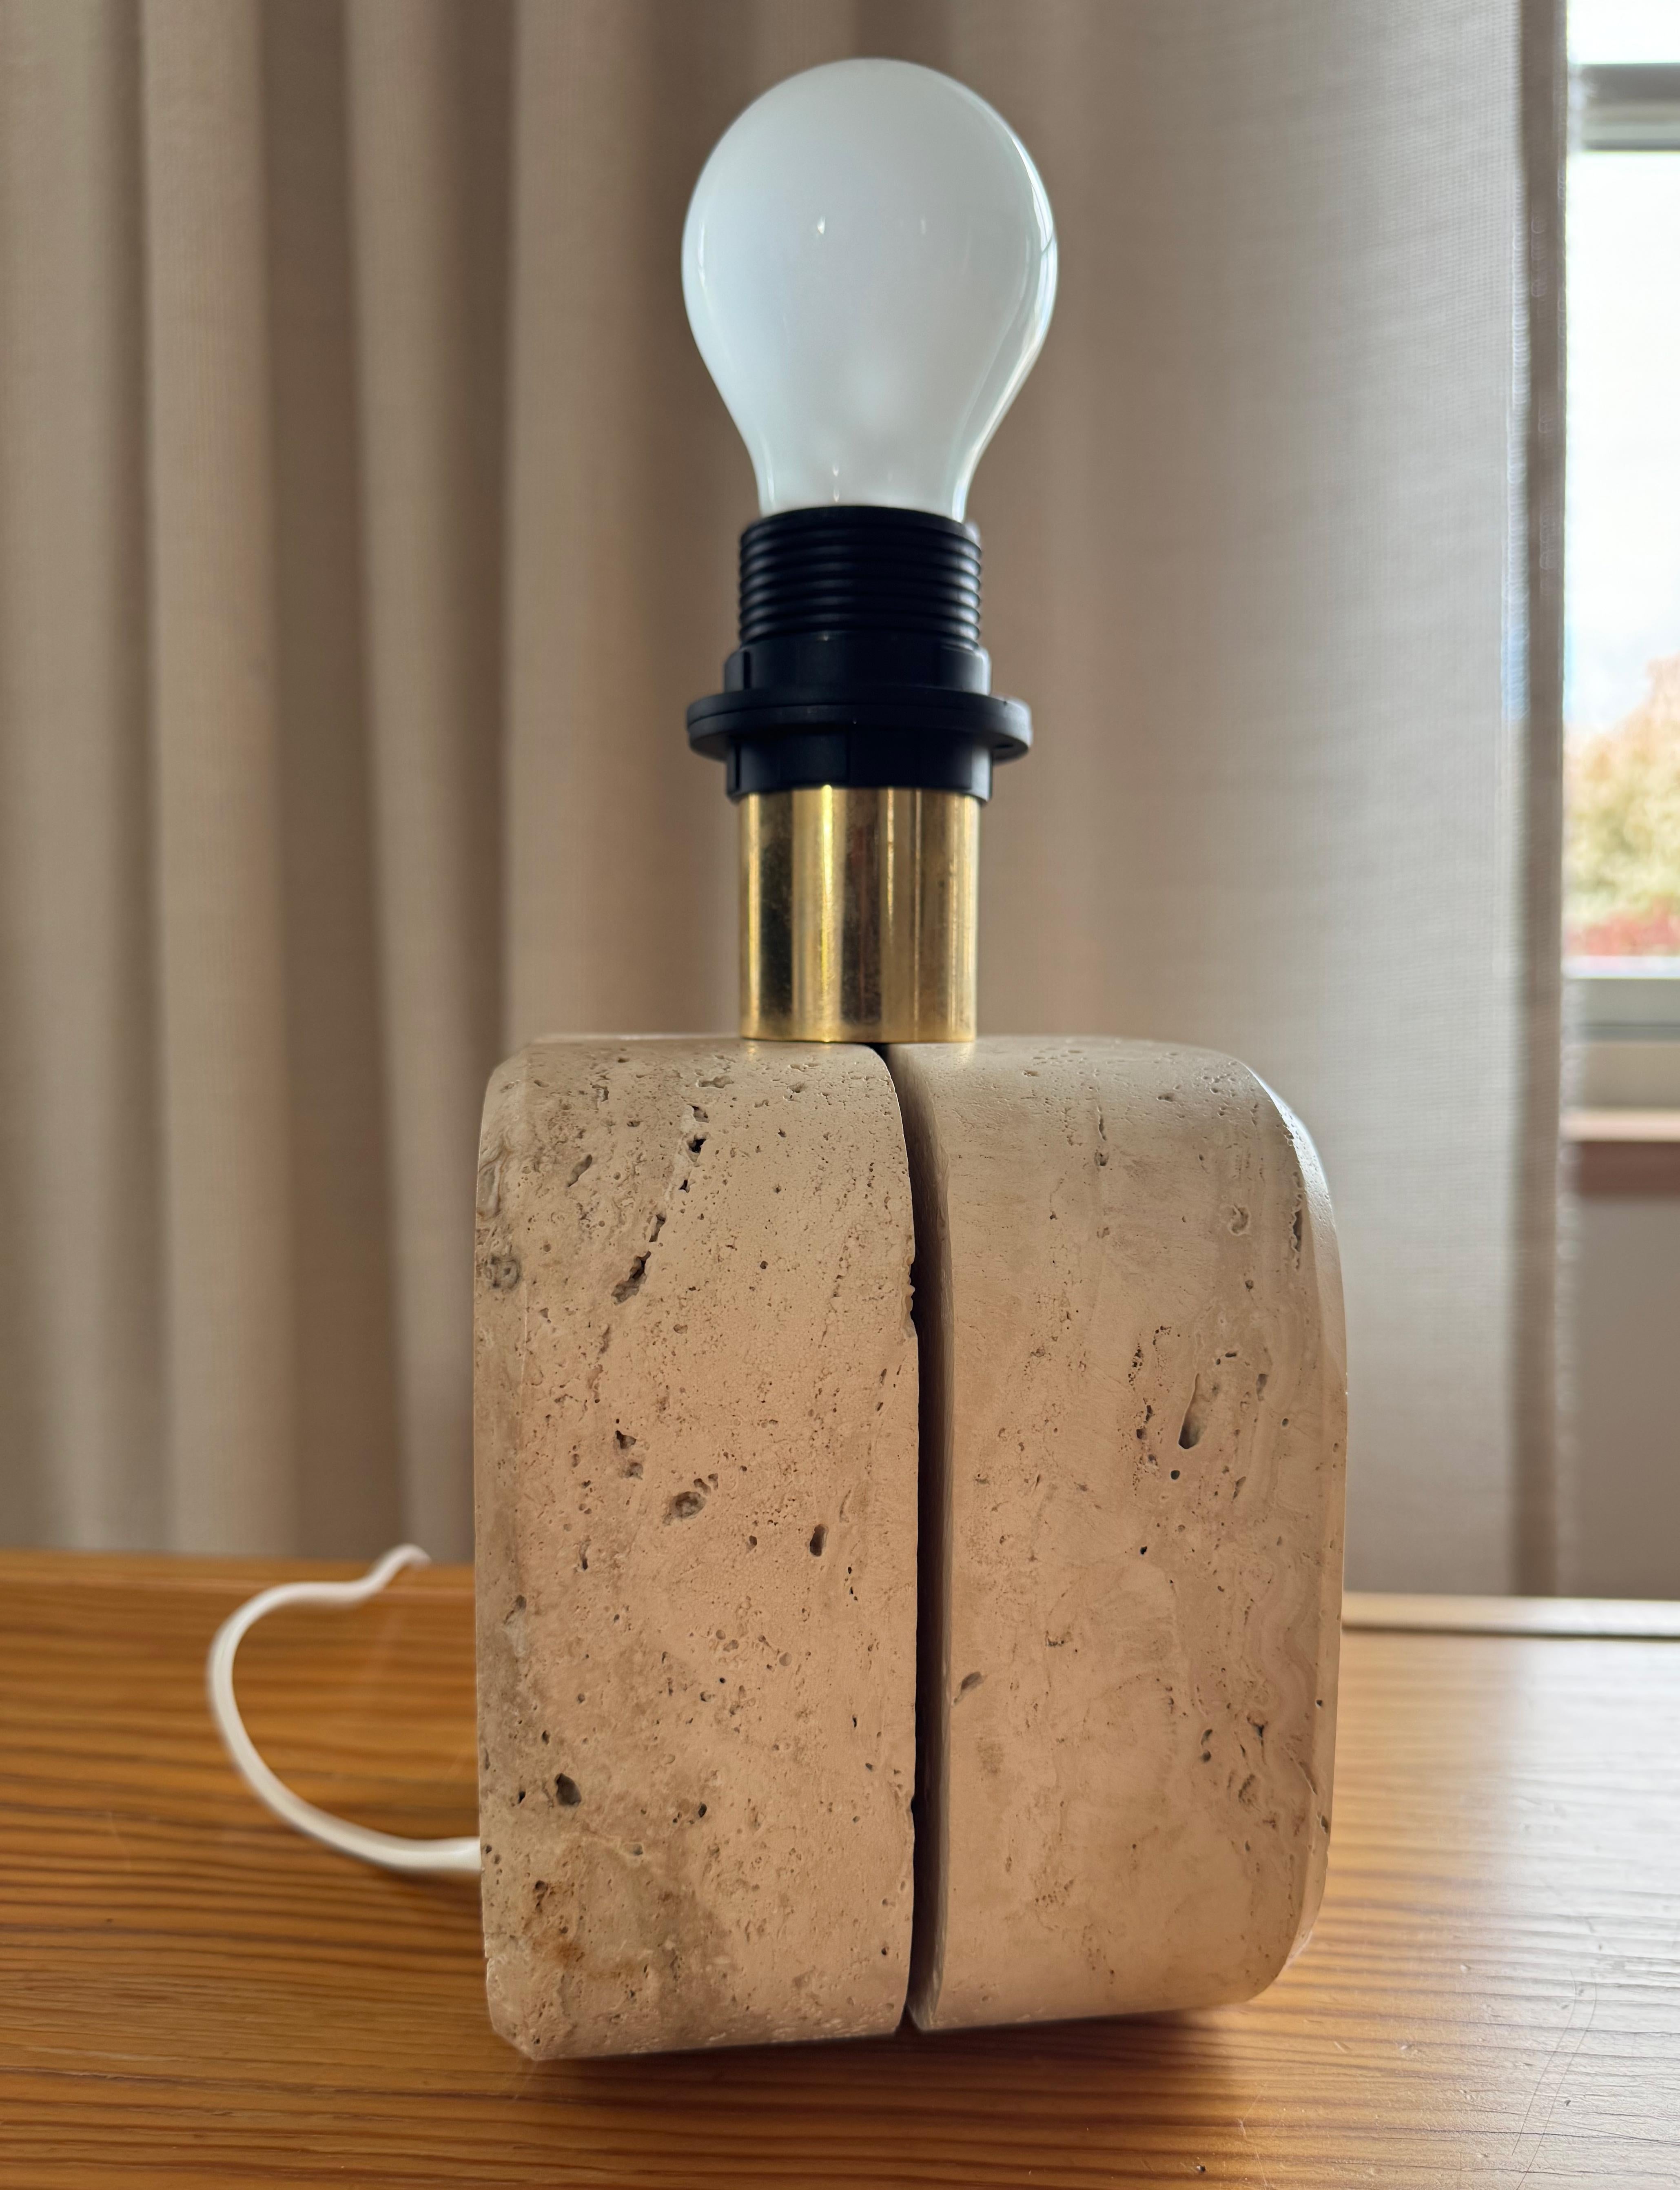 Brutalist Cerri Nestore Table Lamp in Travertine, 1970s. Made in Italy. For Sale